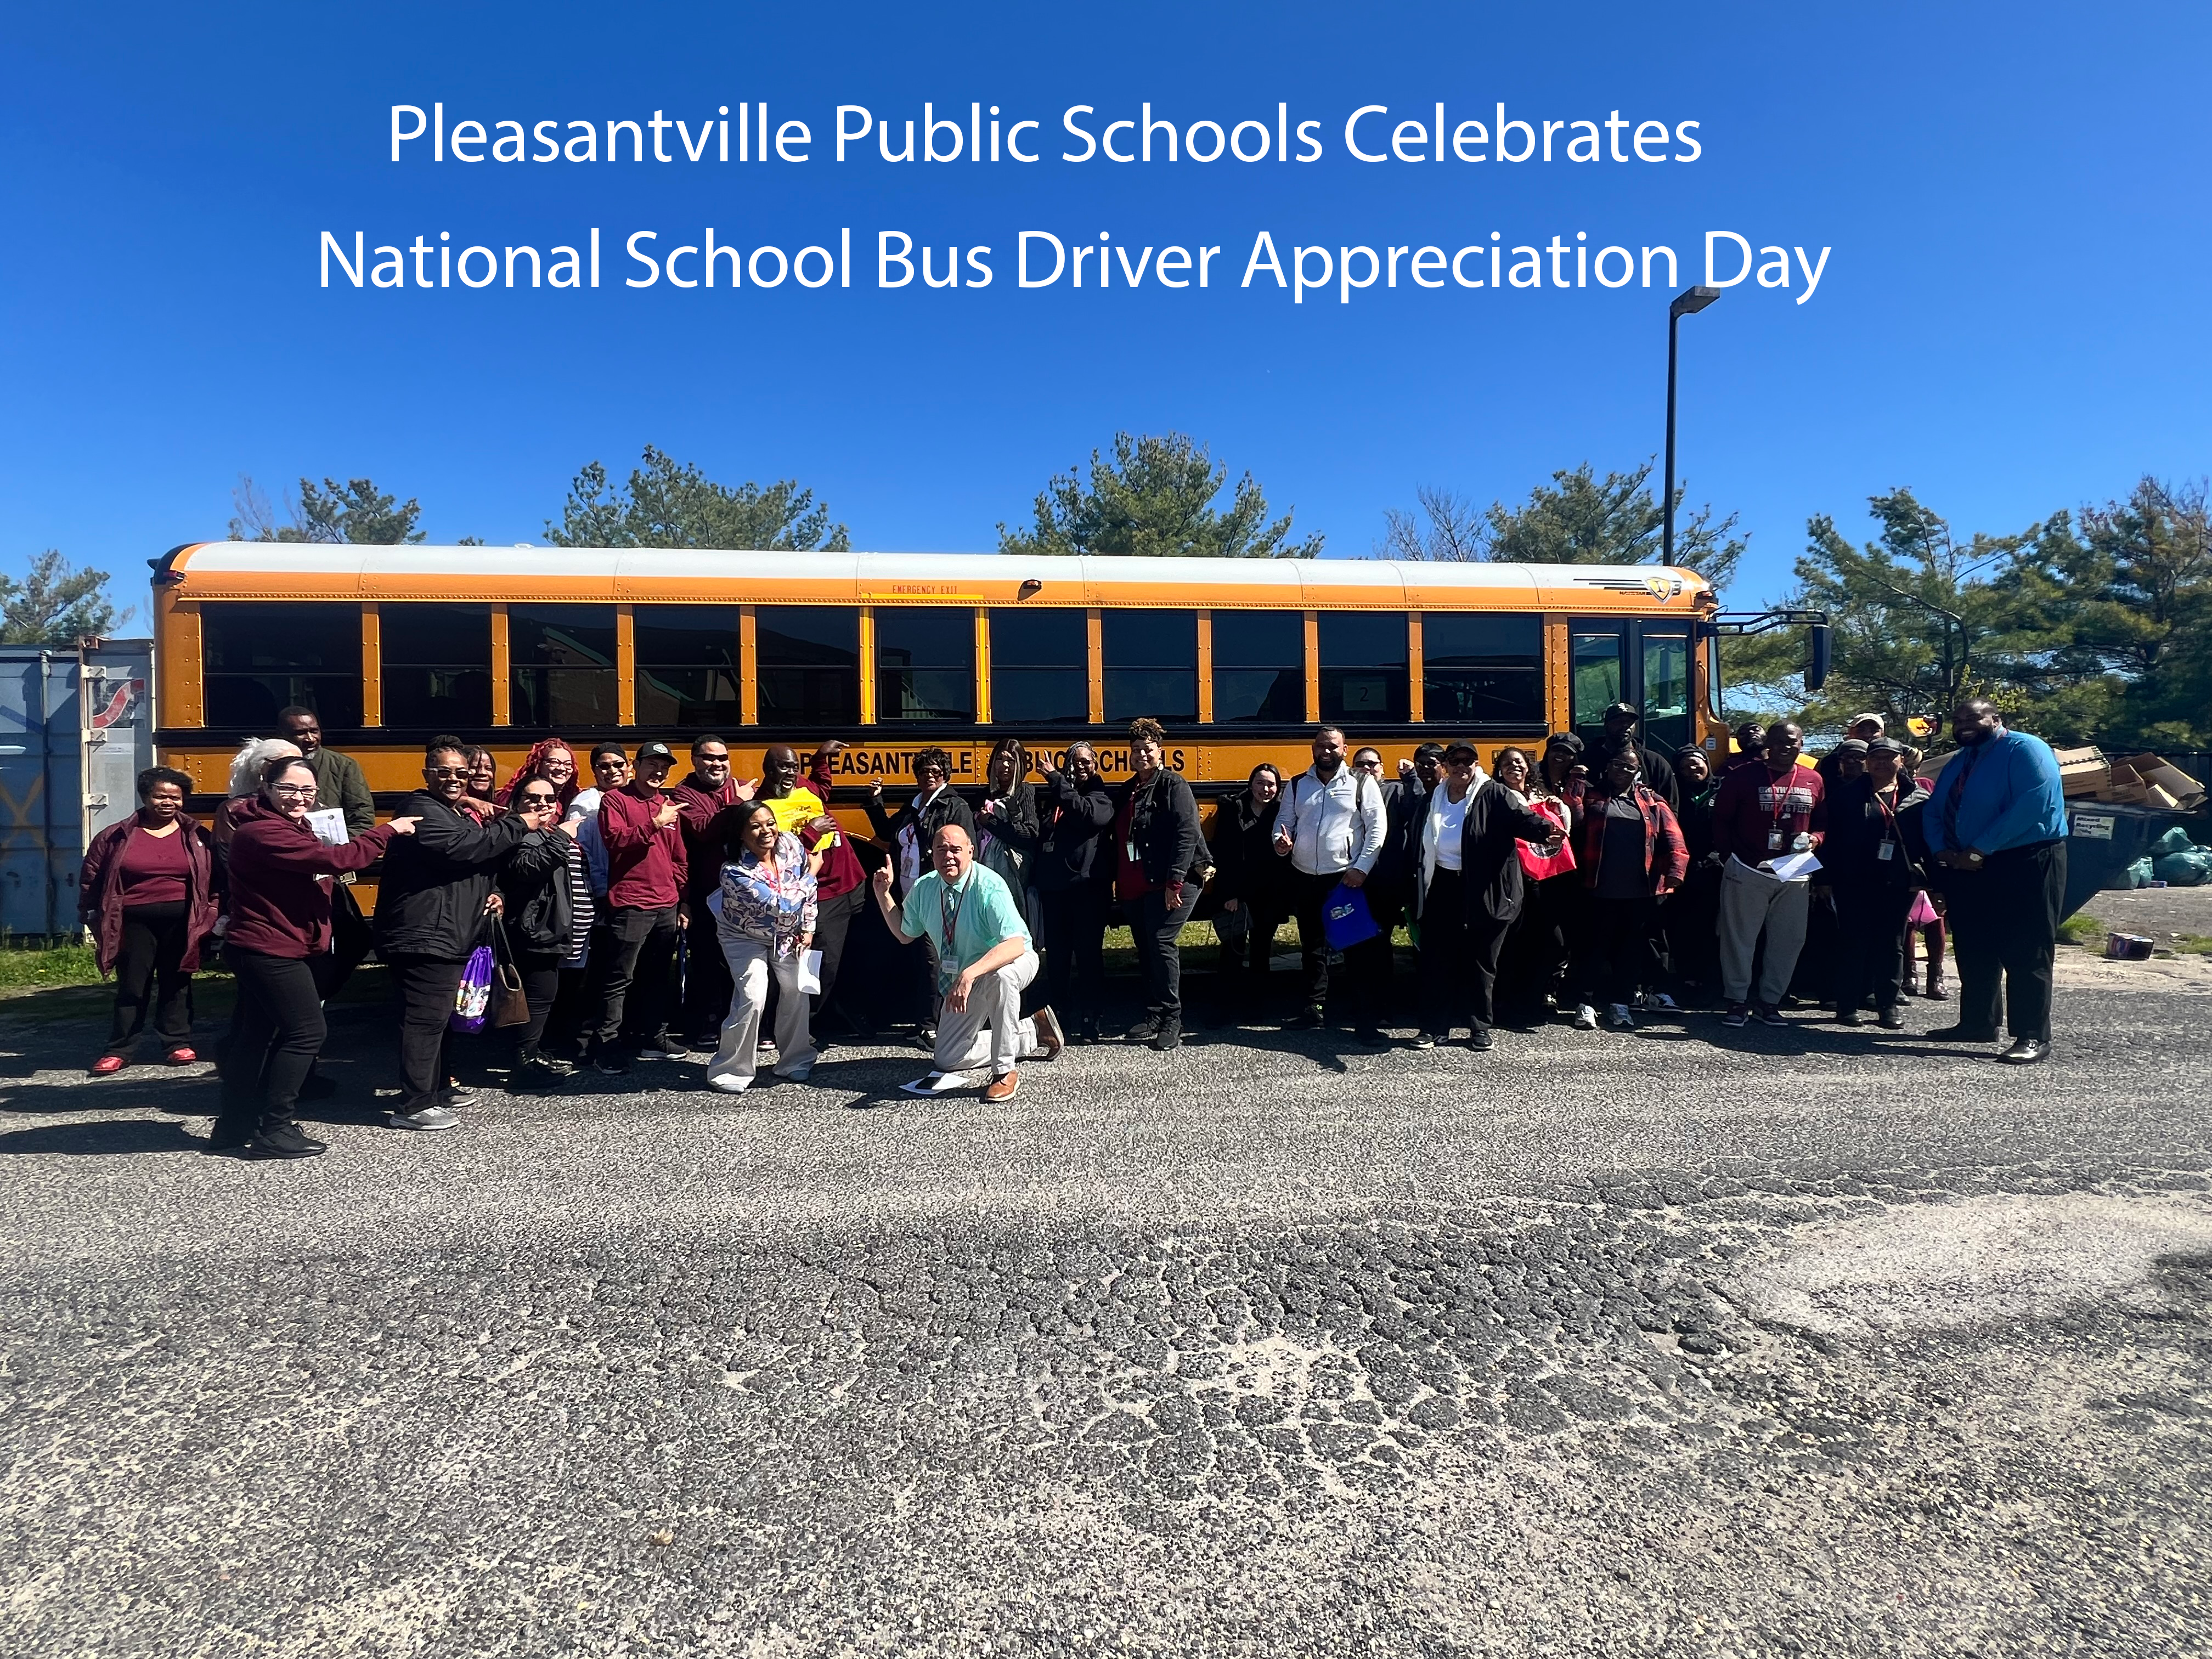 Pleasantville Public Schools Celebrates National School Bus Driver Appreciation Day